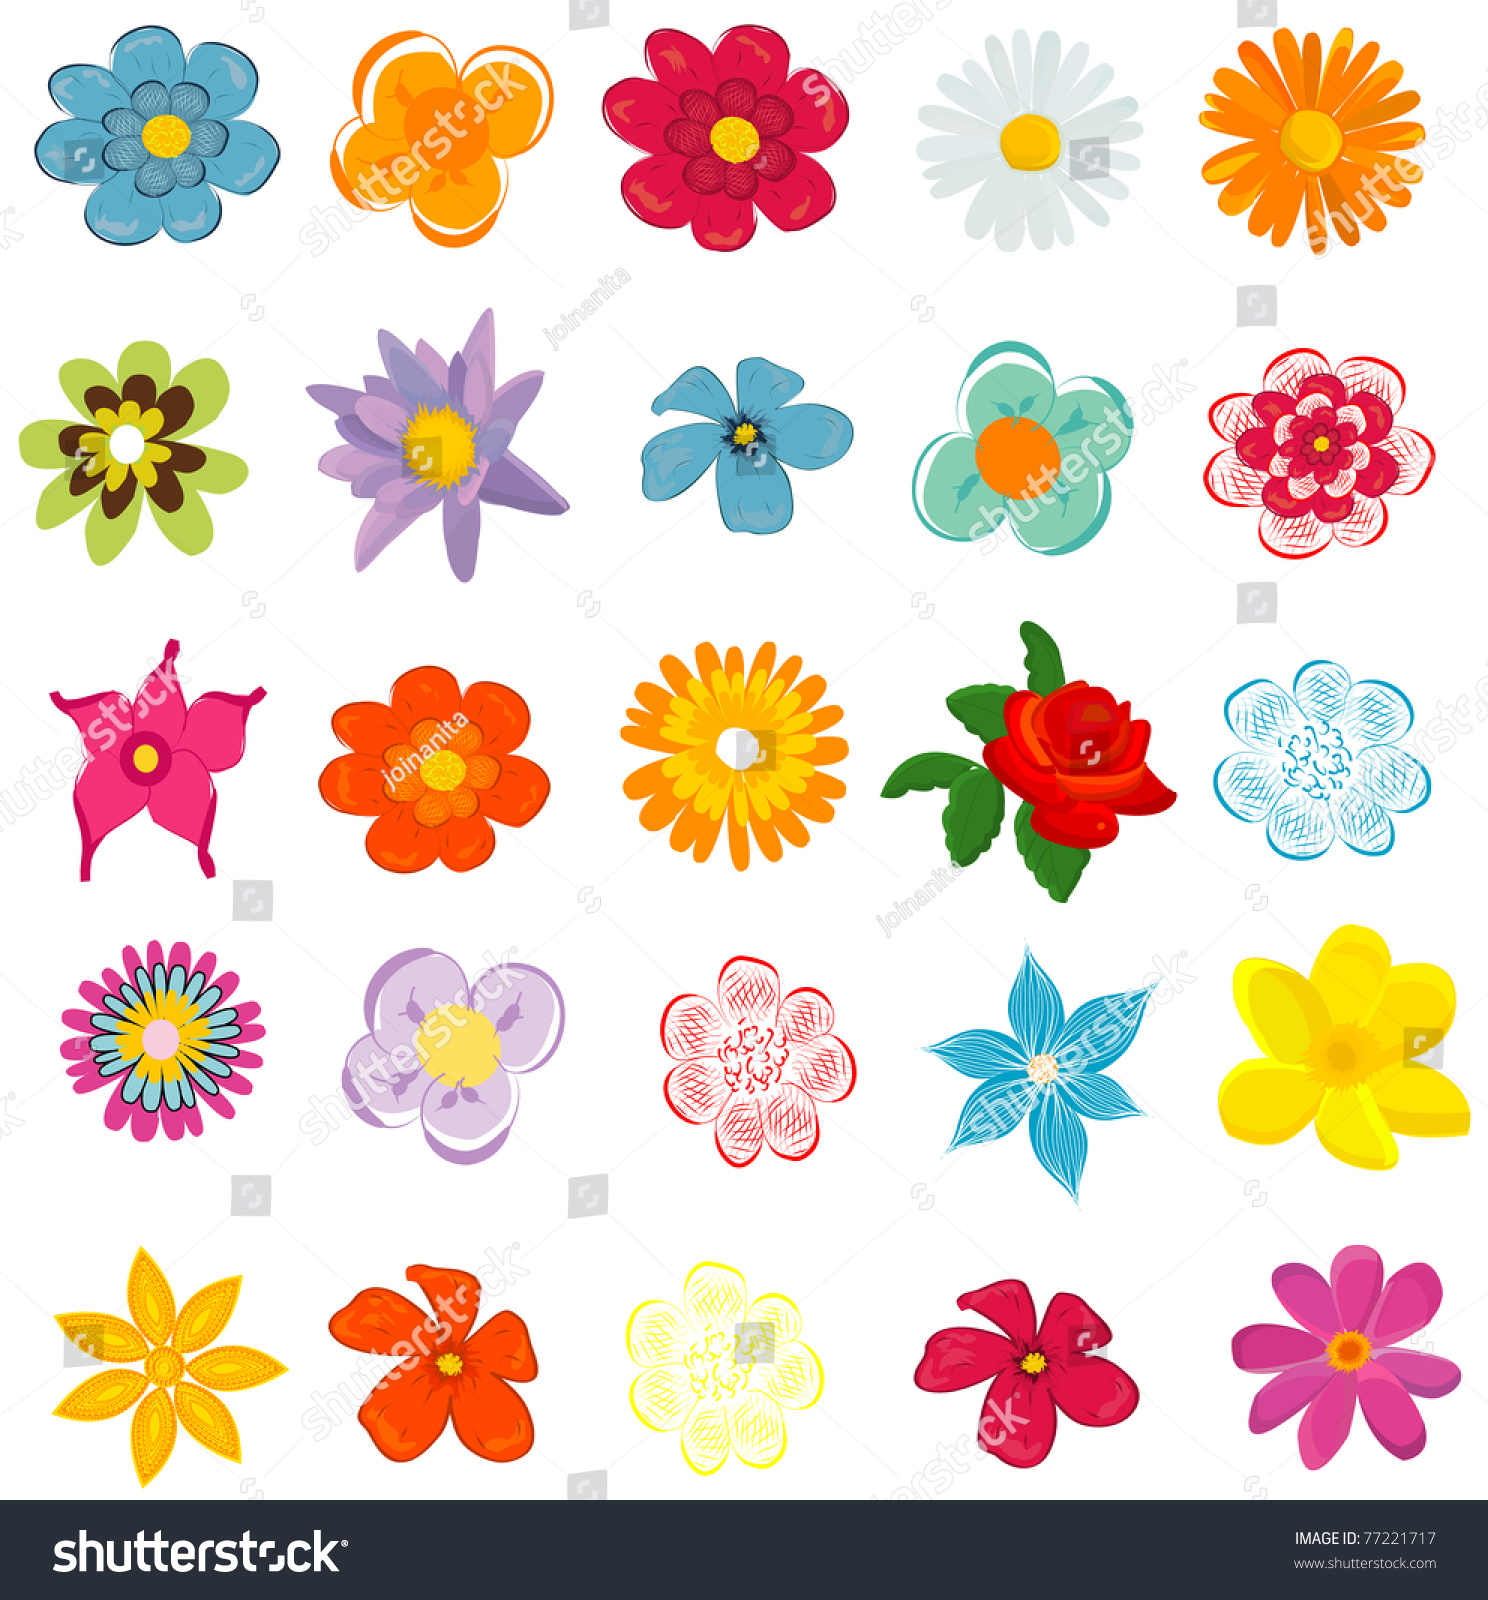 Colorful Spring Flowers Vector Illustration - 77221717 : Shutterstock